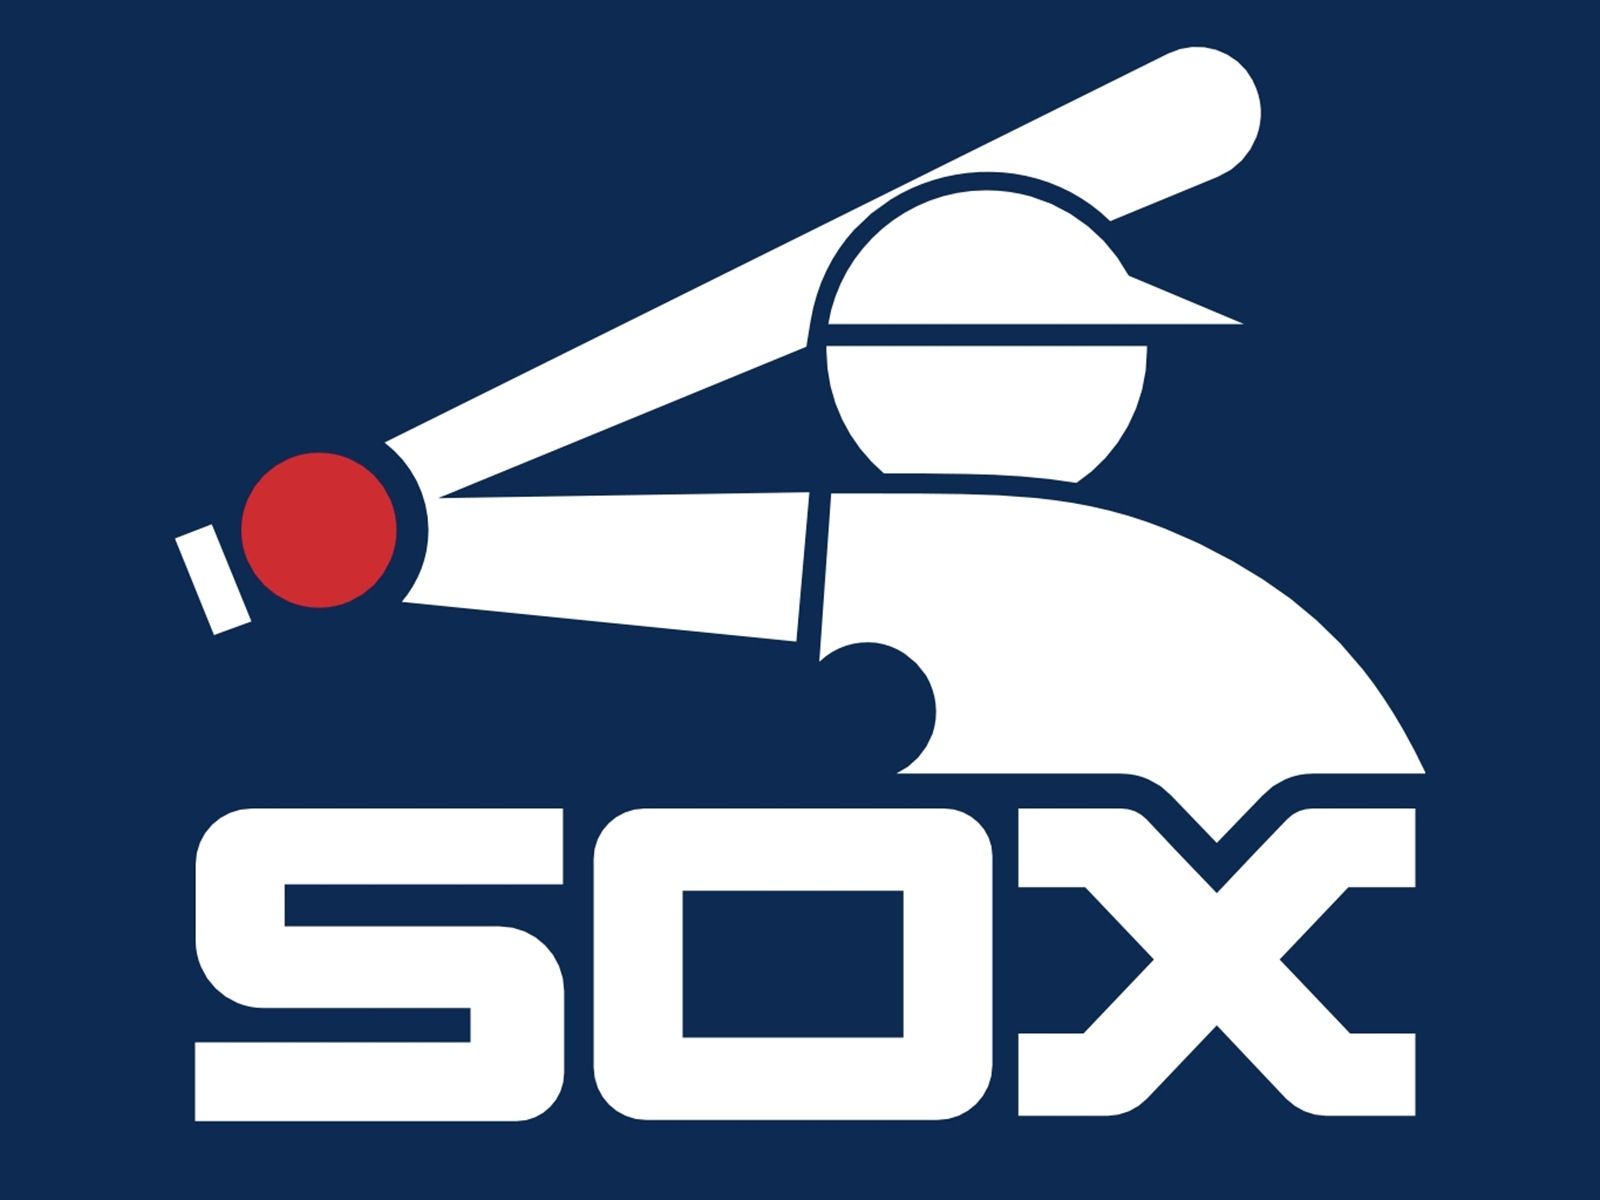 Boston Red Sox Logo Wallpaper | Free Download Clip Art | Free Clip ...